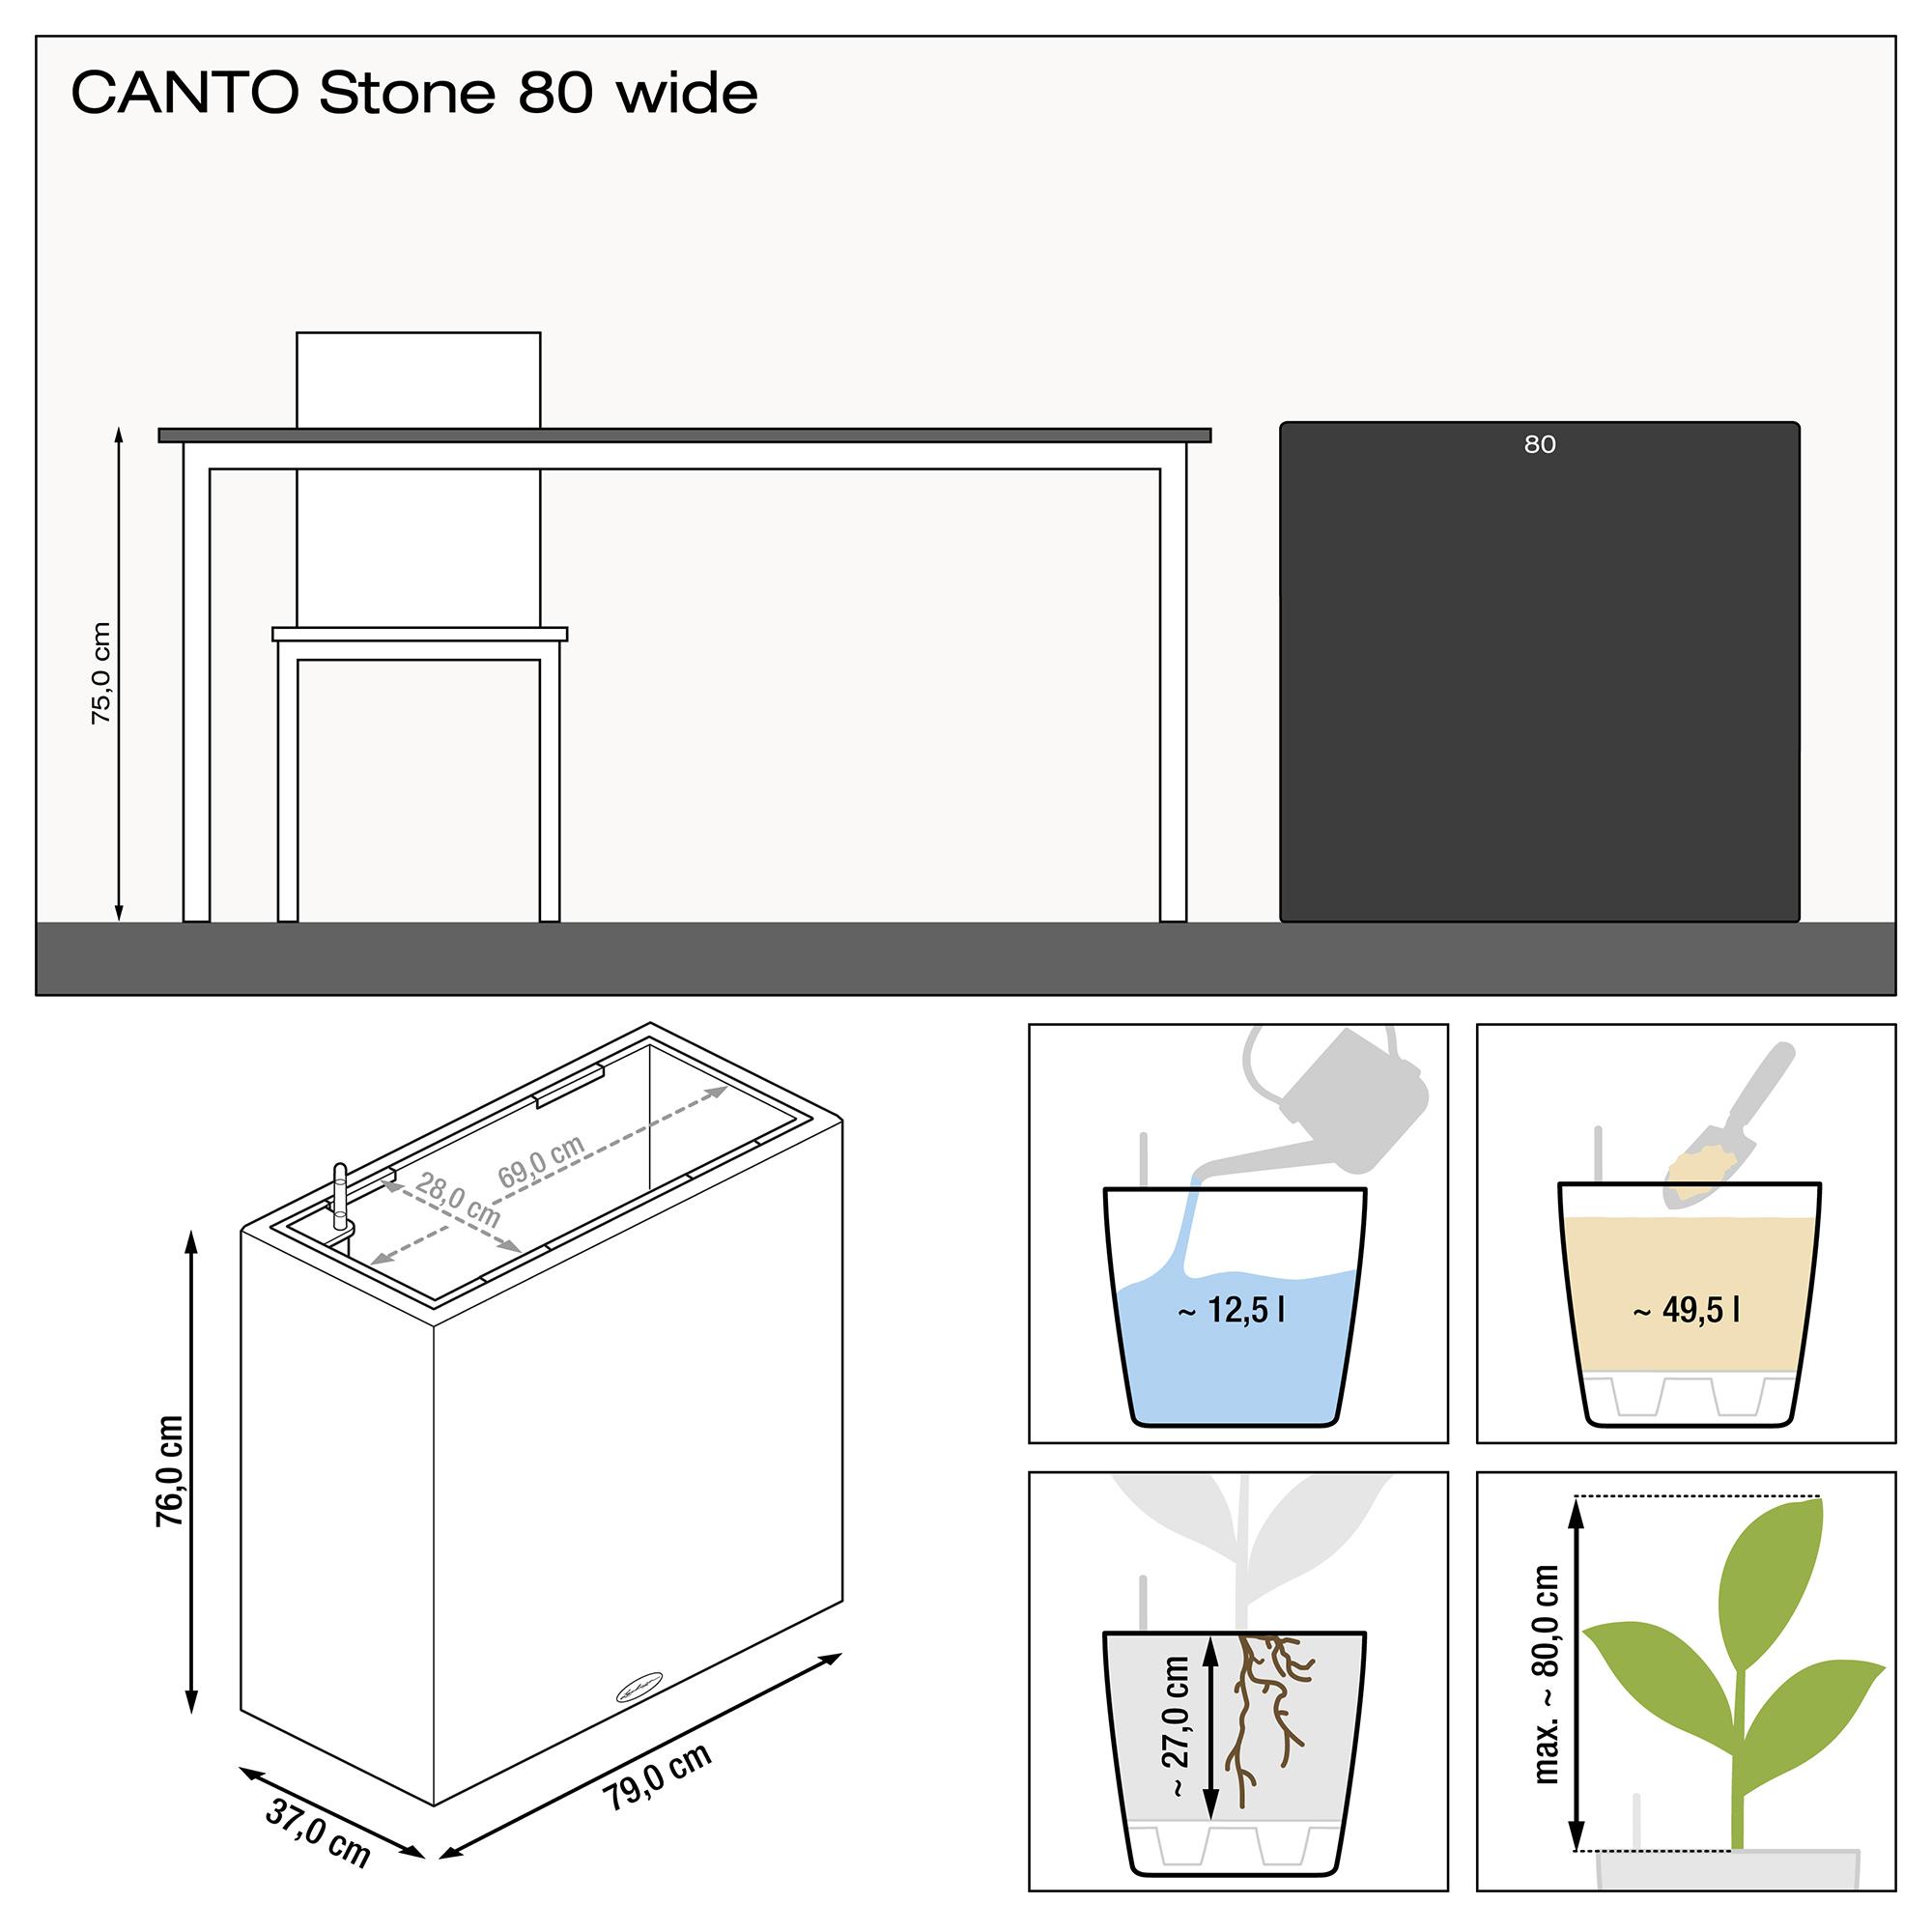 le_canto-stone-wide_product_addi_nz Thumb